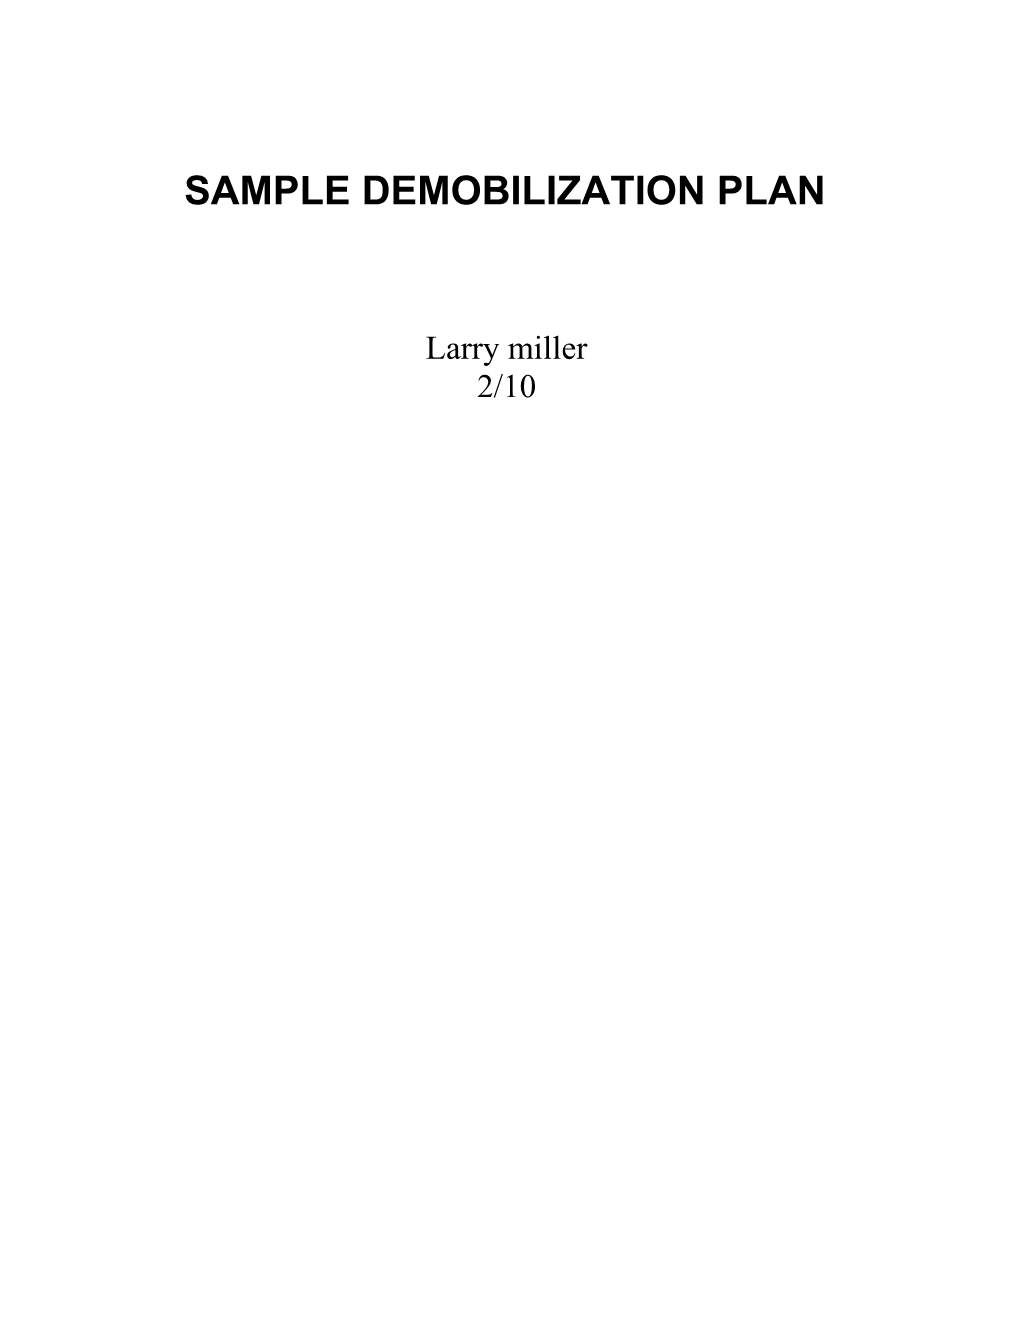 Sample Demobilization Plan